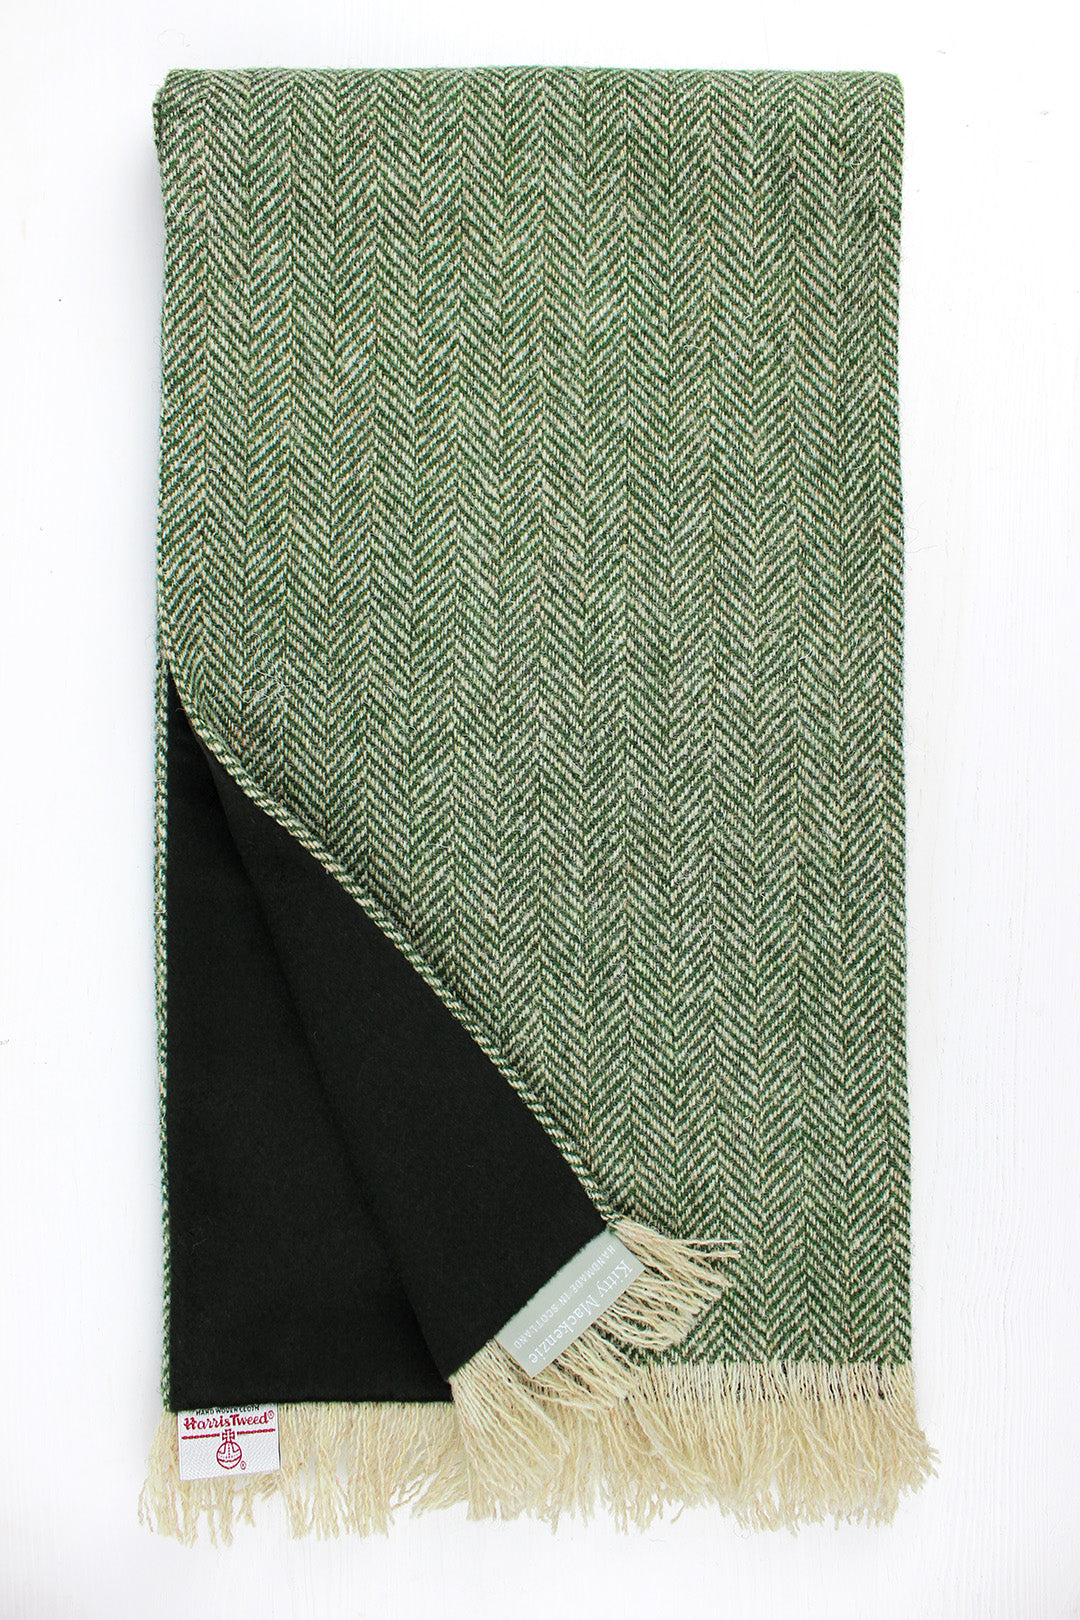 Harris tweed scarf  in green herringbone, lined with a dark green cashmere. Made in Scotland